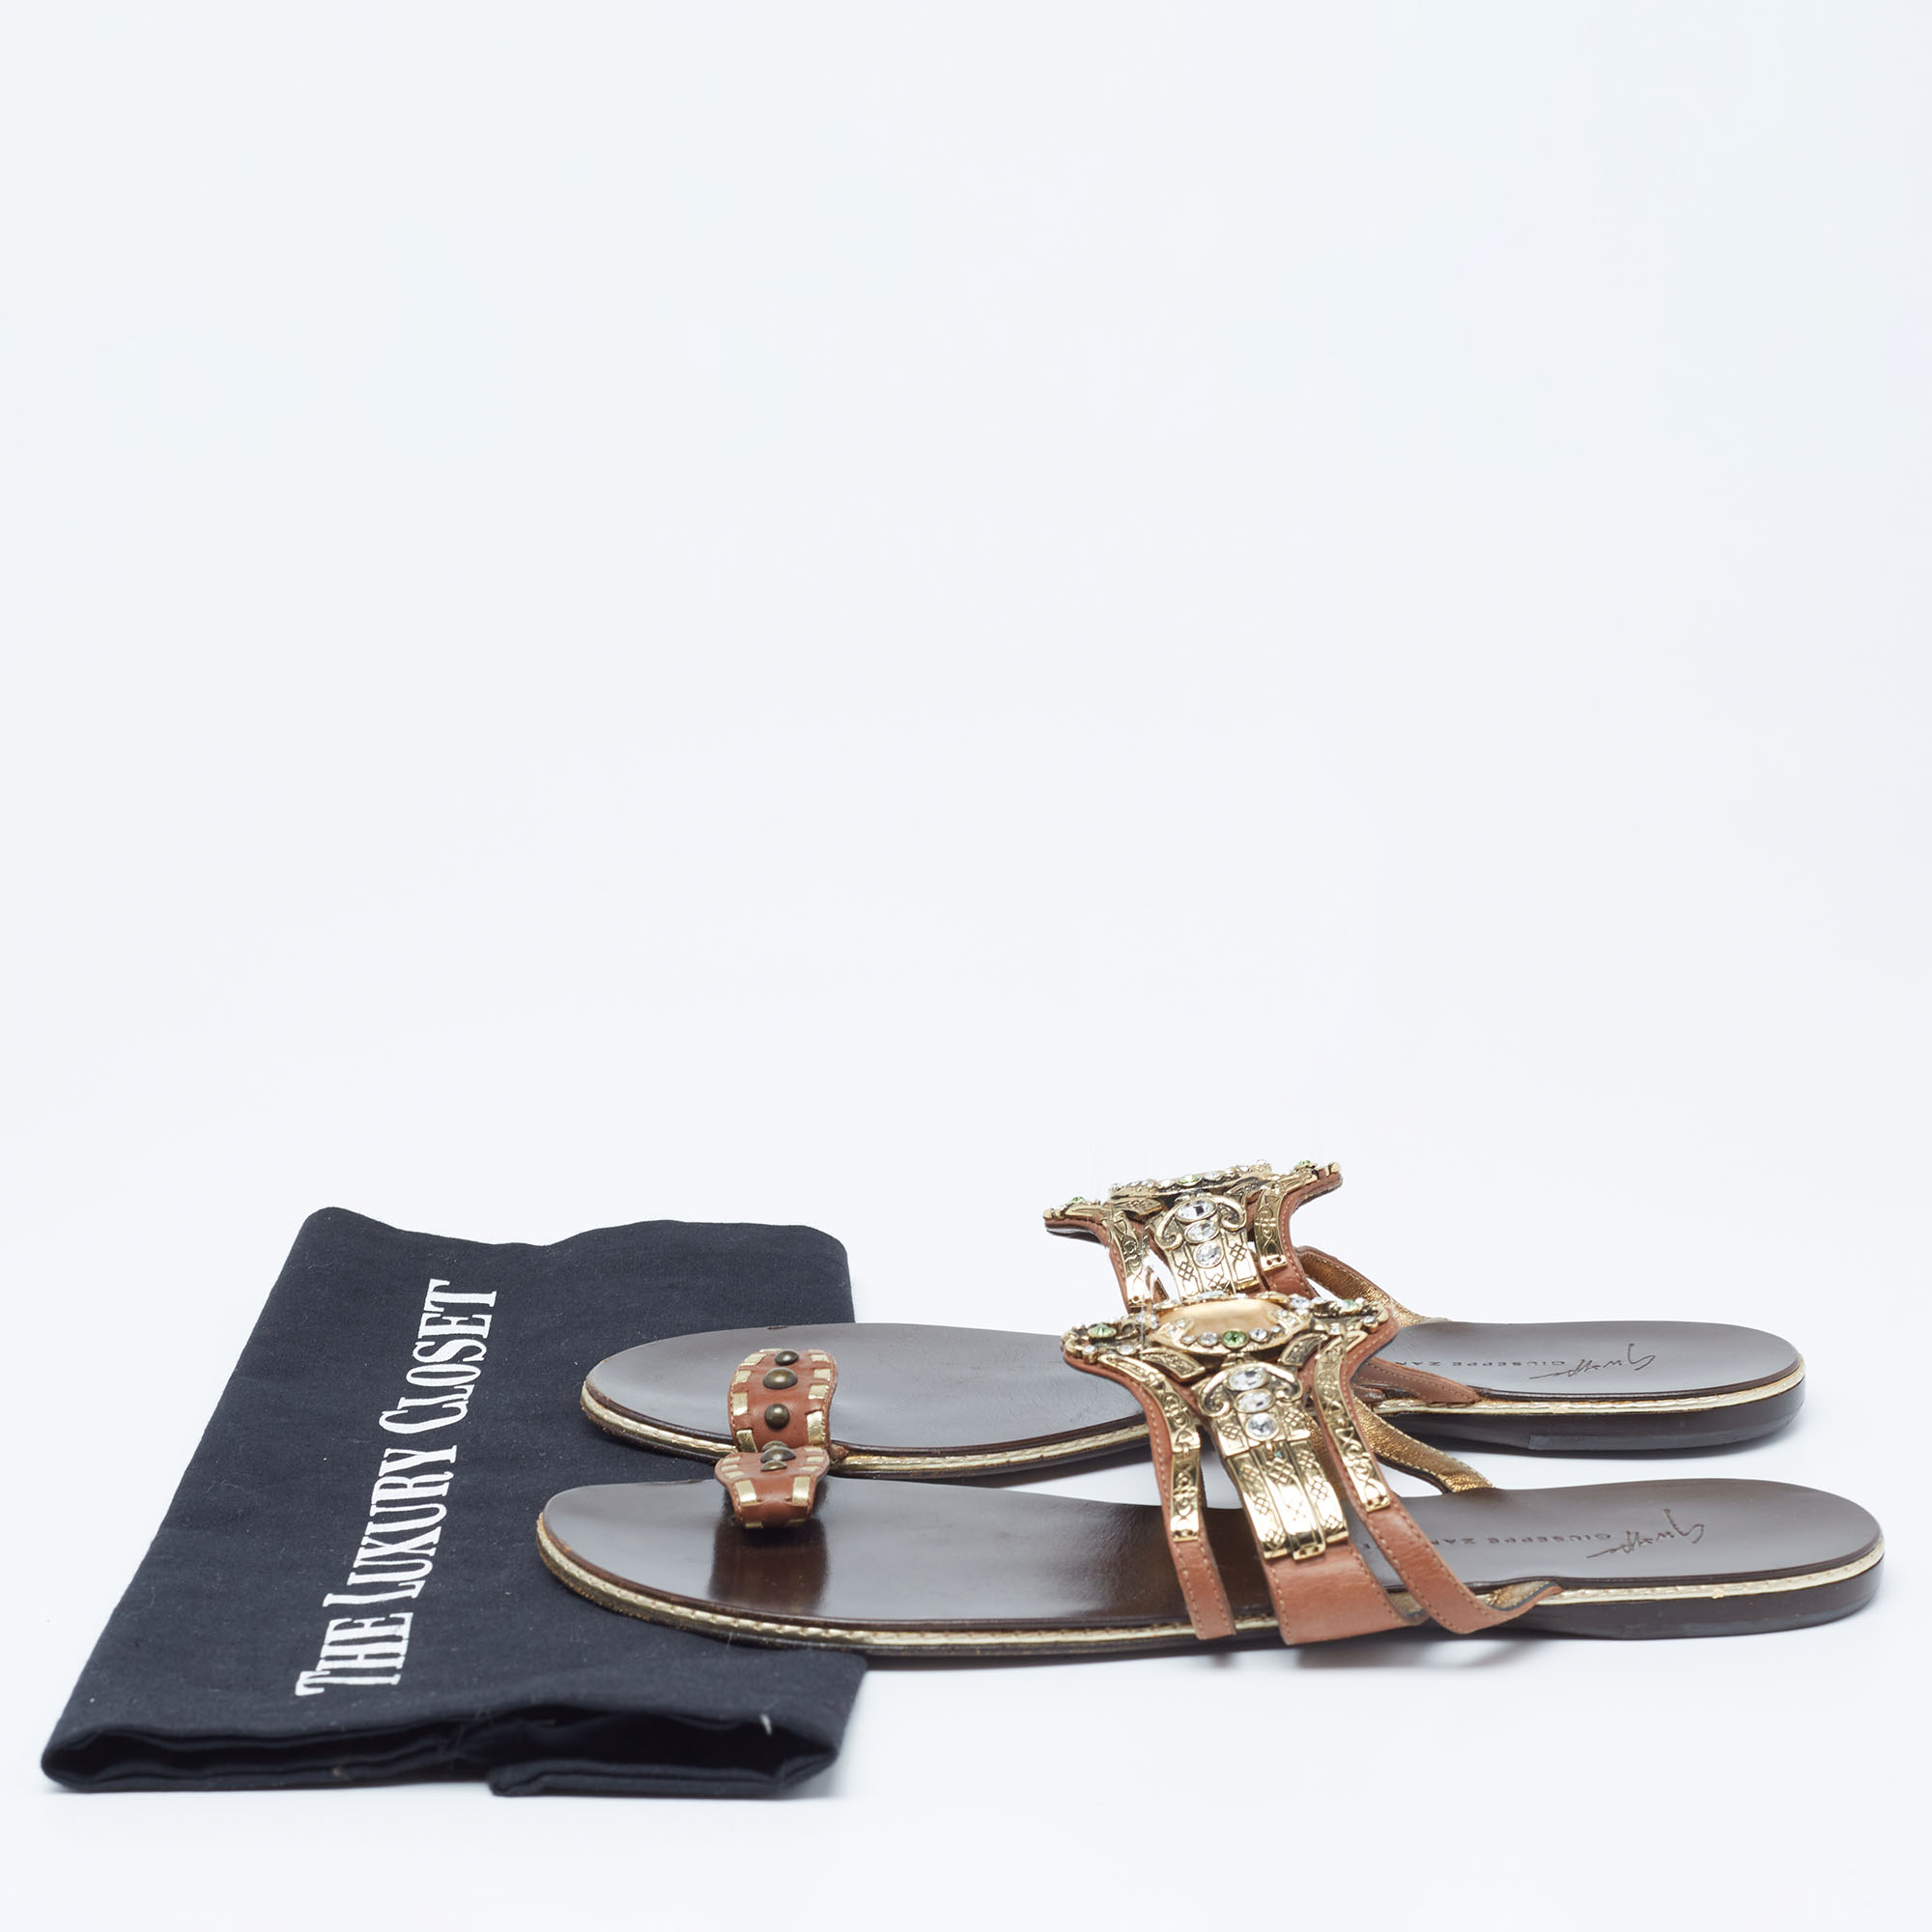 Giuseppe Zanotti Brown Leather Embellished Flat Sandals Size 39